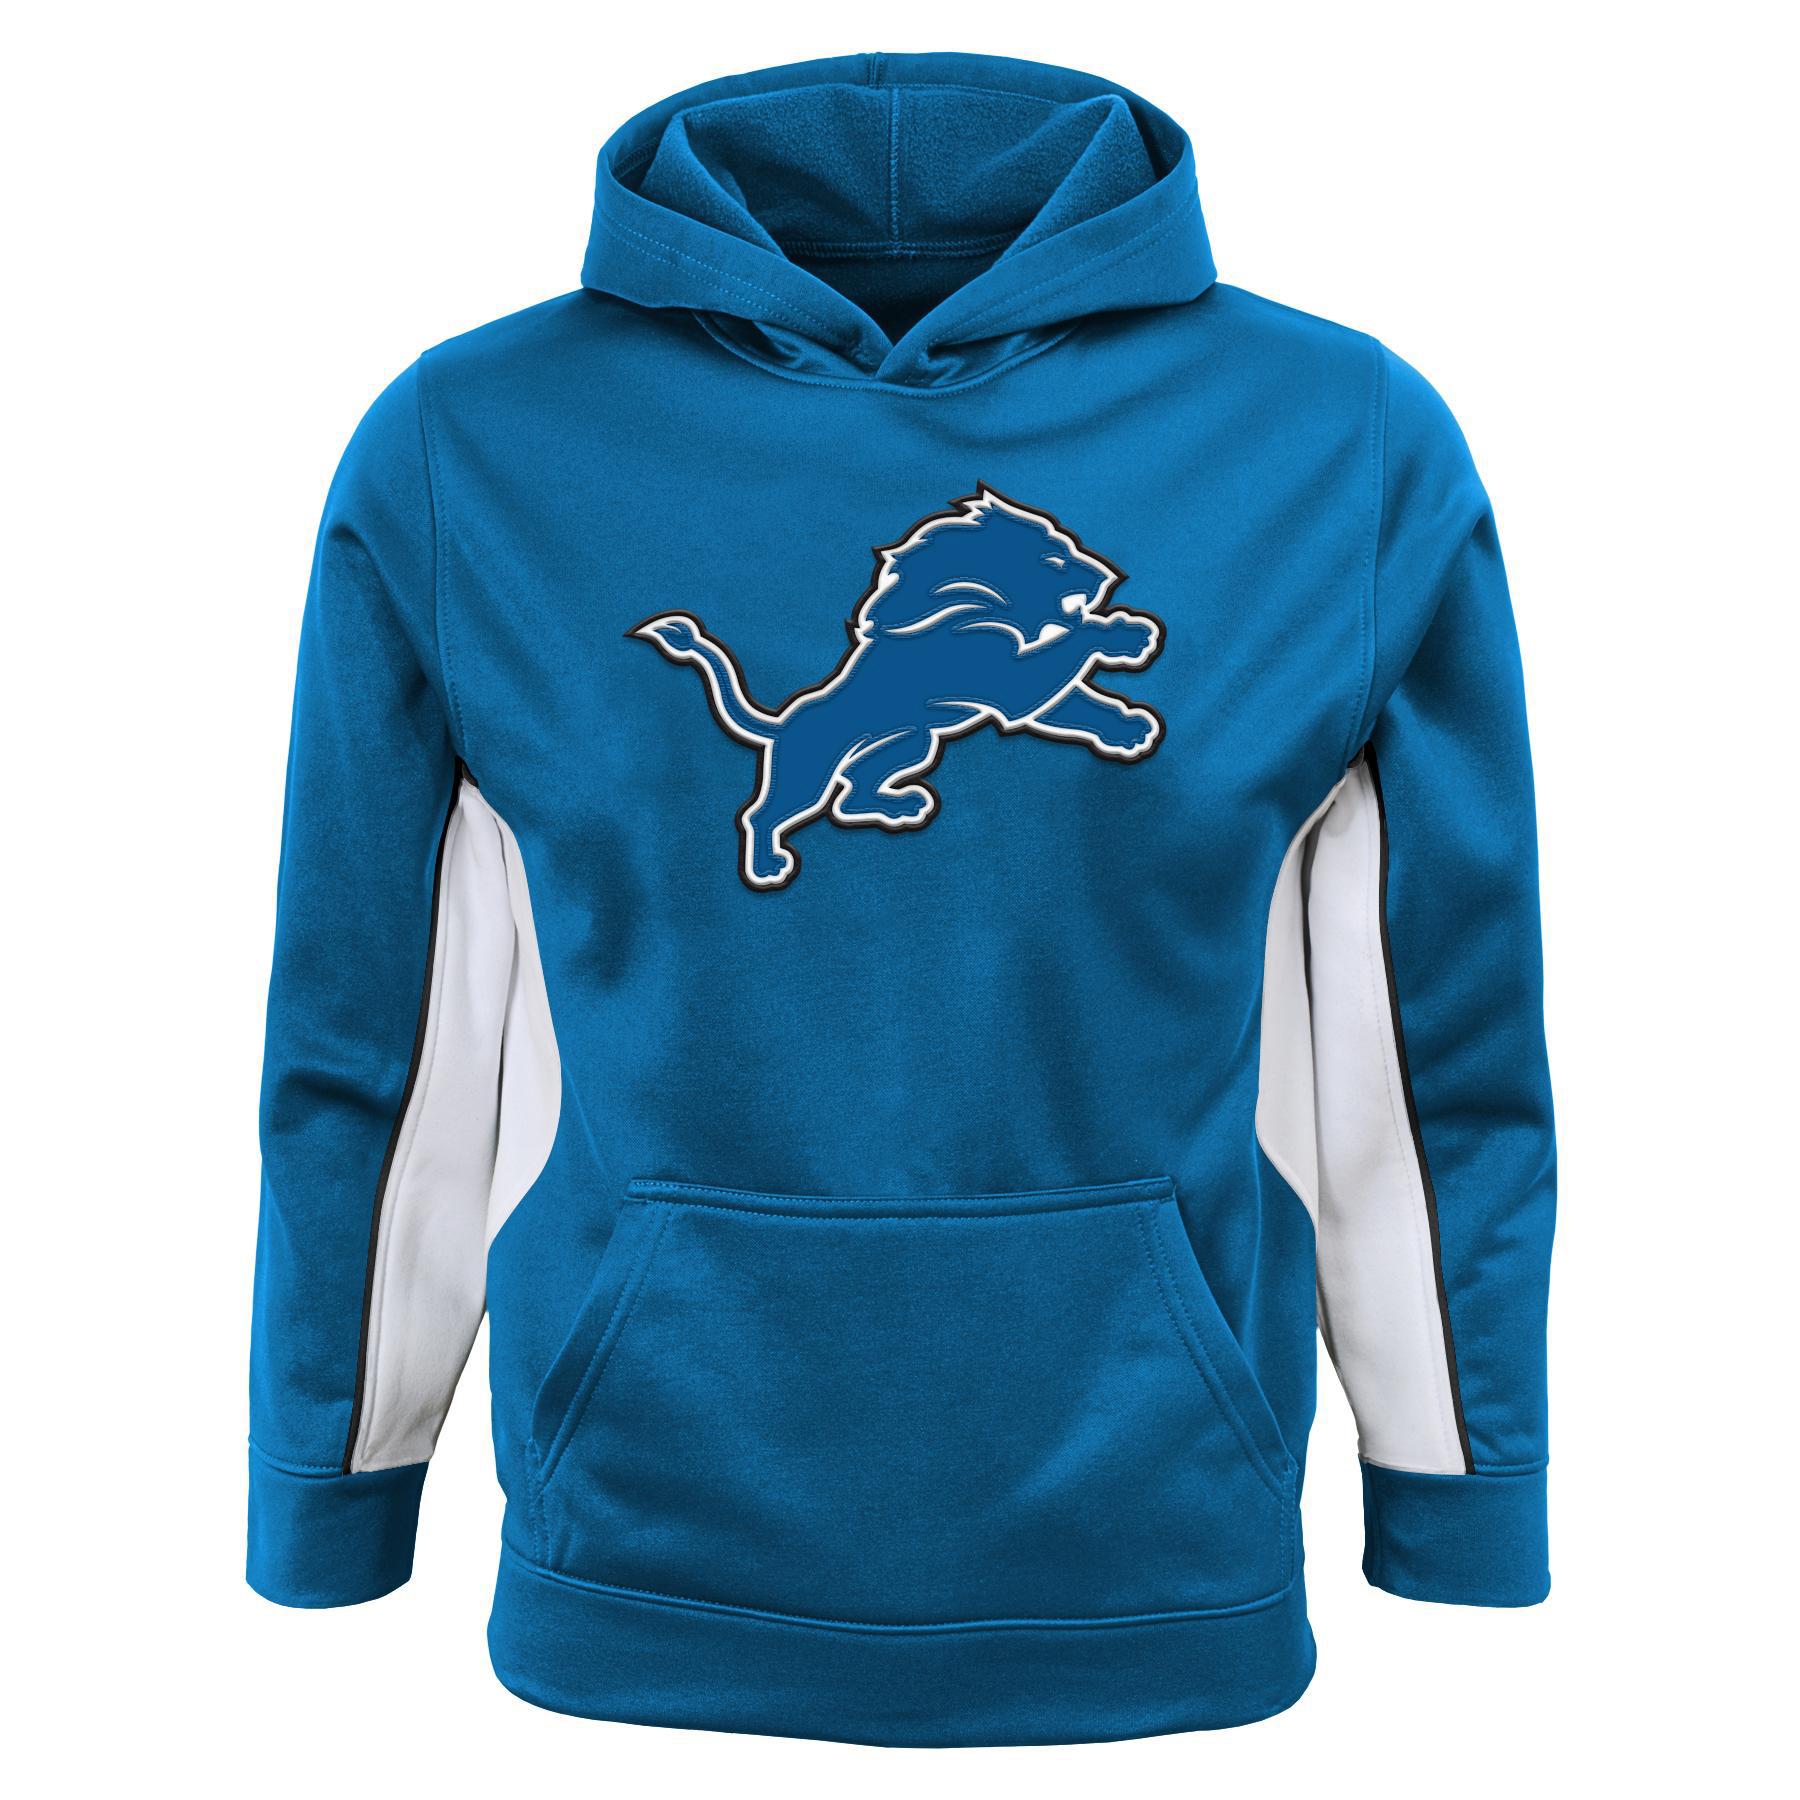 NFL Boys' Hooded Sweatshirt - Detroit Lions